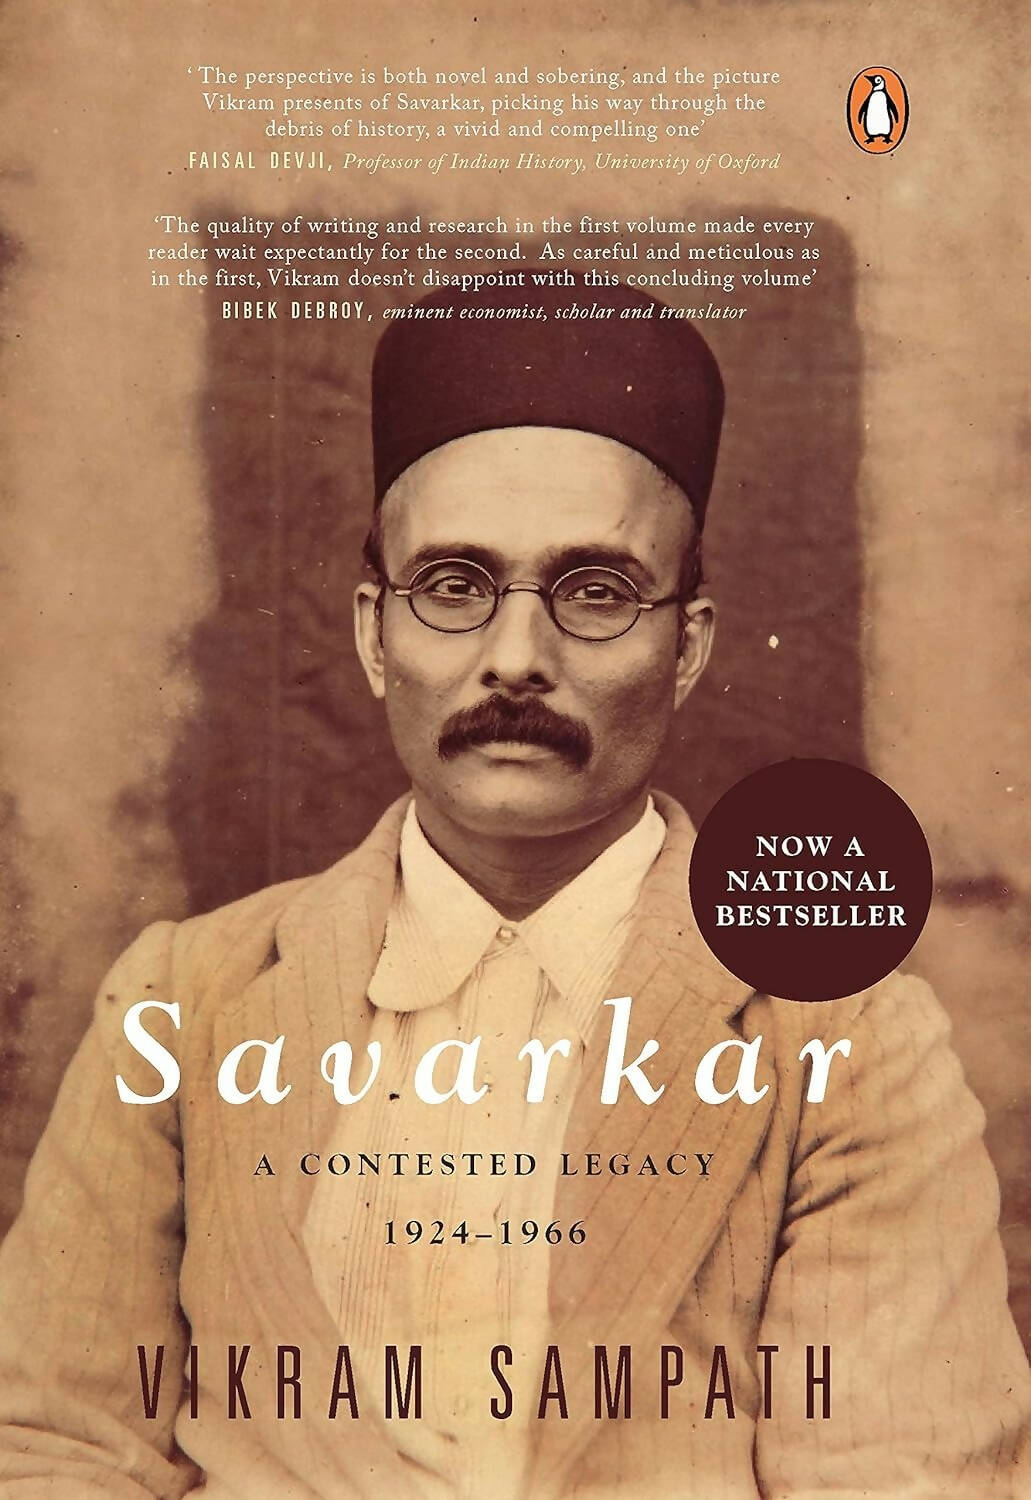 Savarkar: A Contested Legacy, 1924-1966 by Vikram Sampath